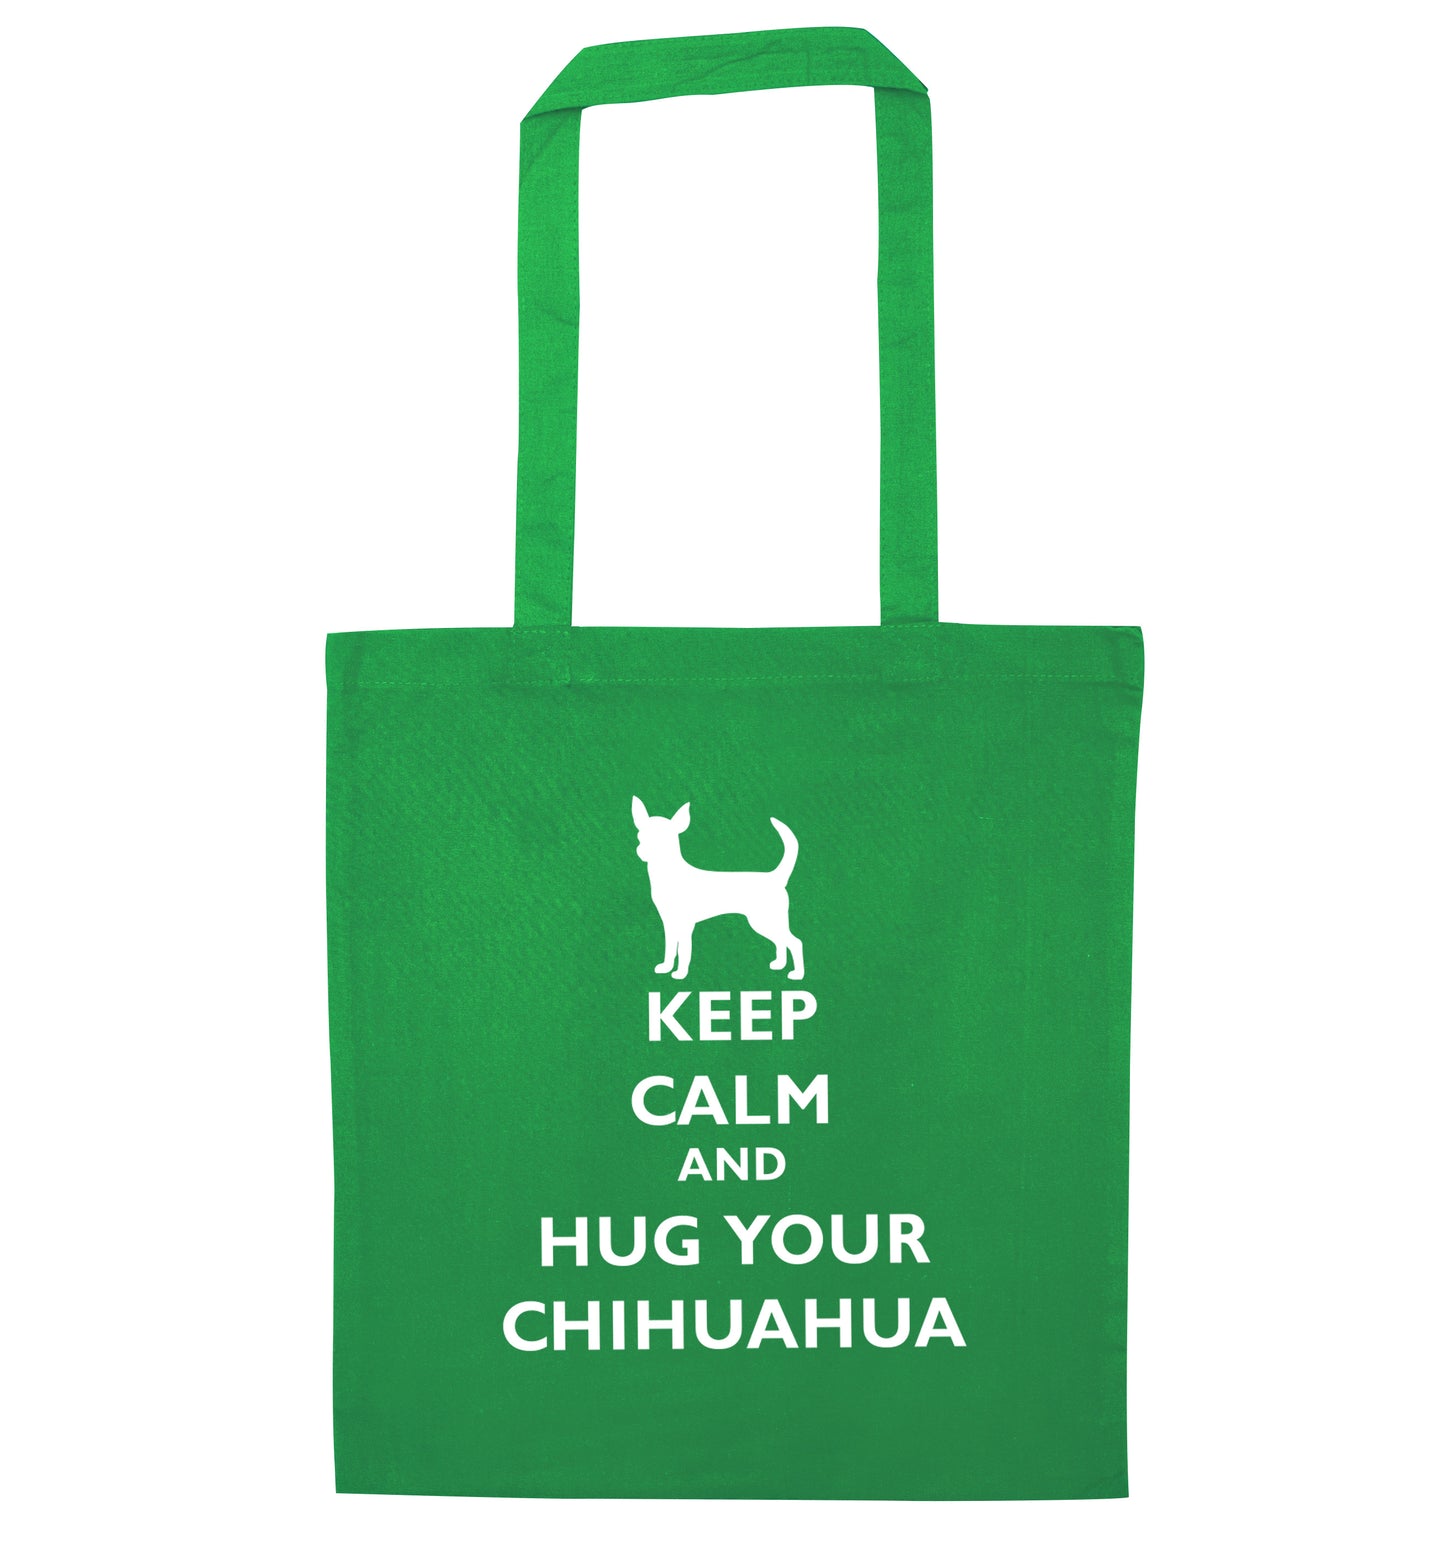 Keep calm and hug your chihuahua green tote bag